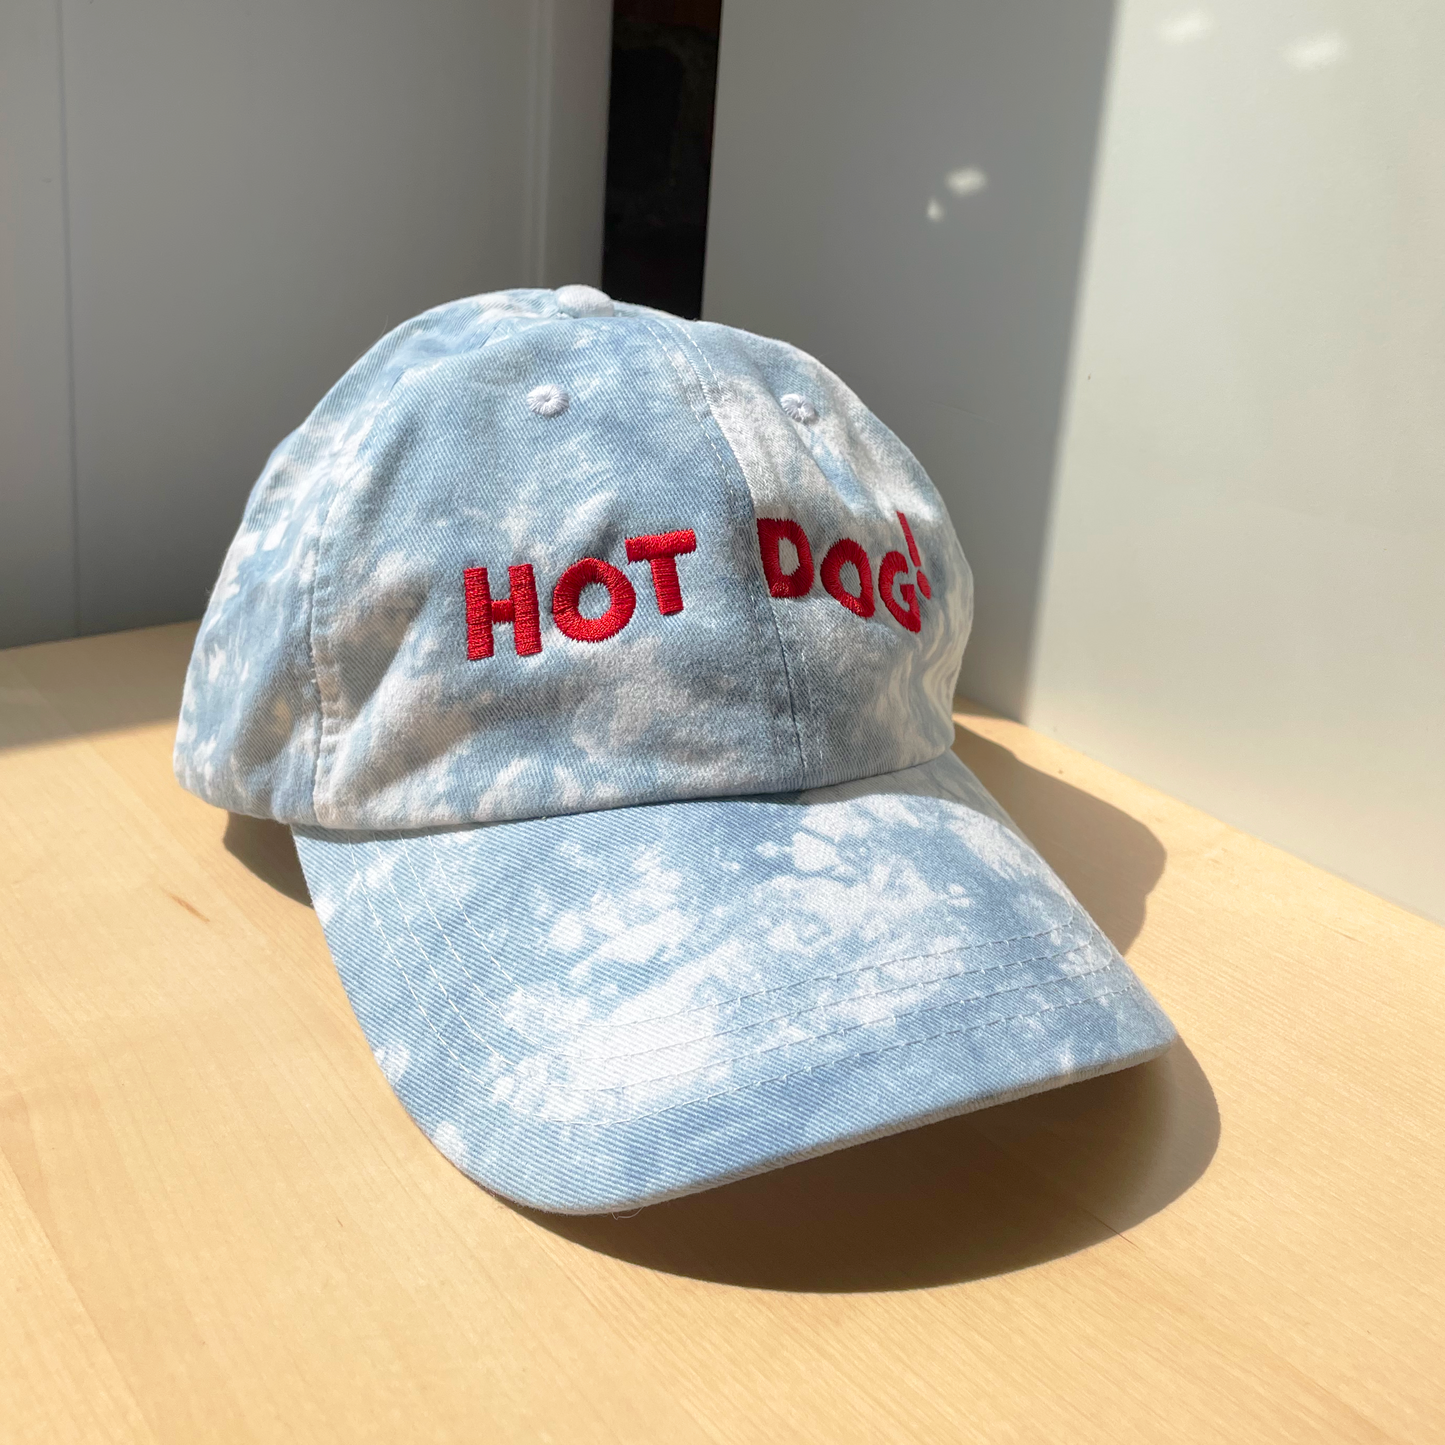 Hot Dog! Hats